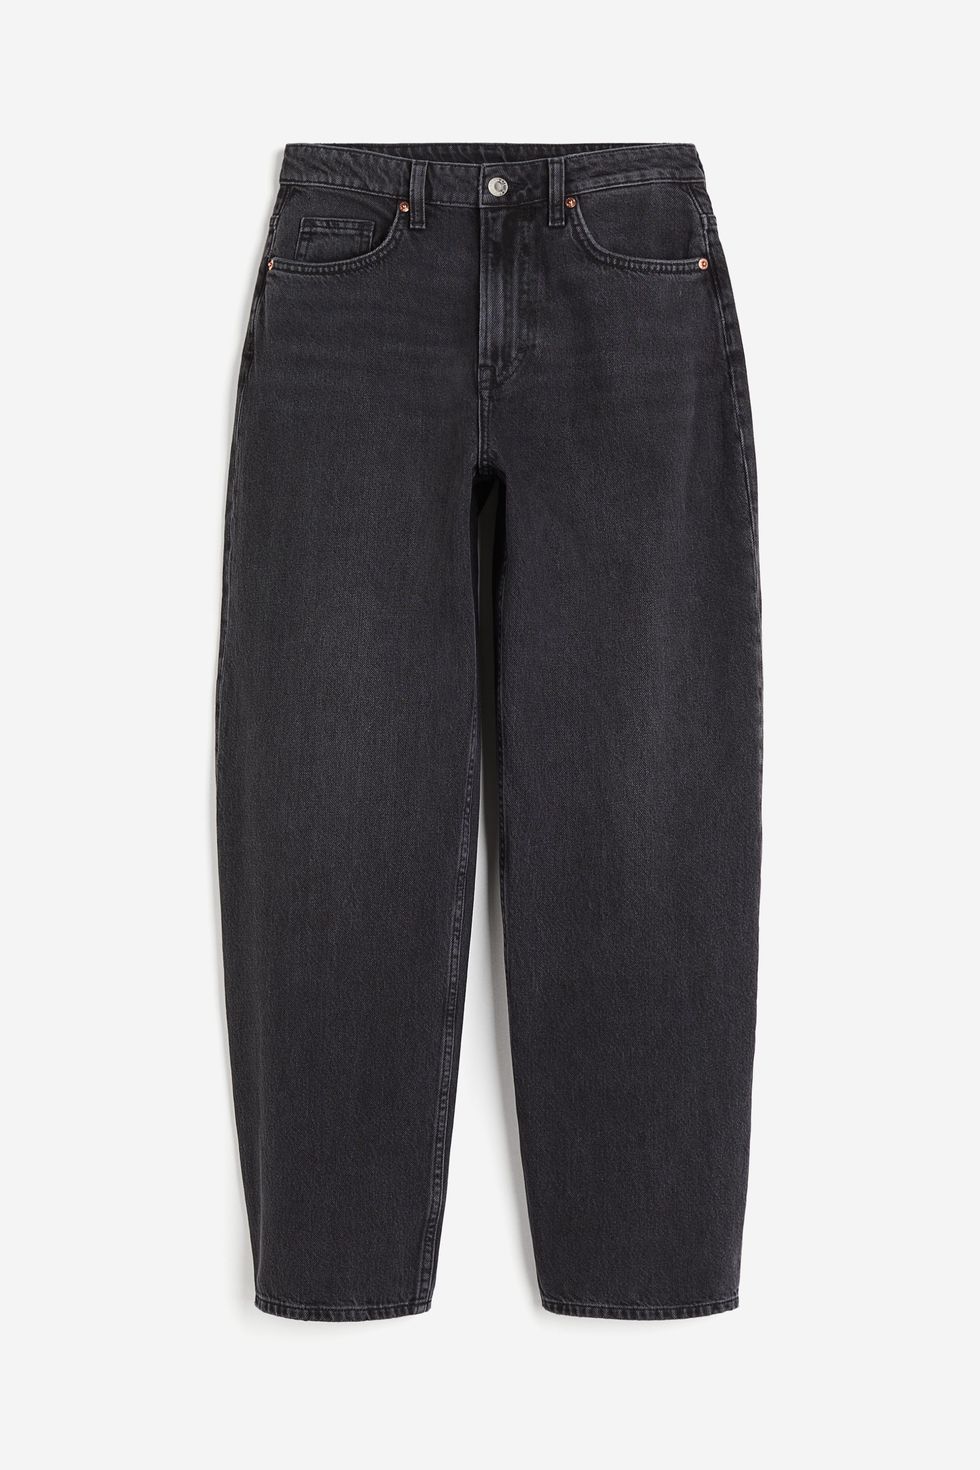 H&M, Pants & Jumpsuits, Hm Real Leather Leggings